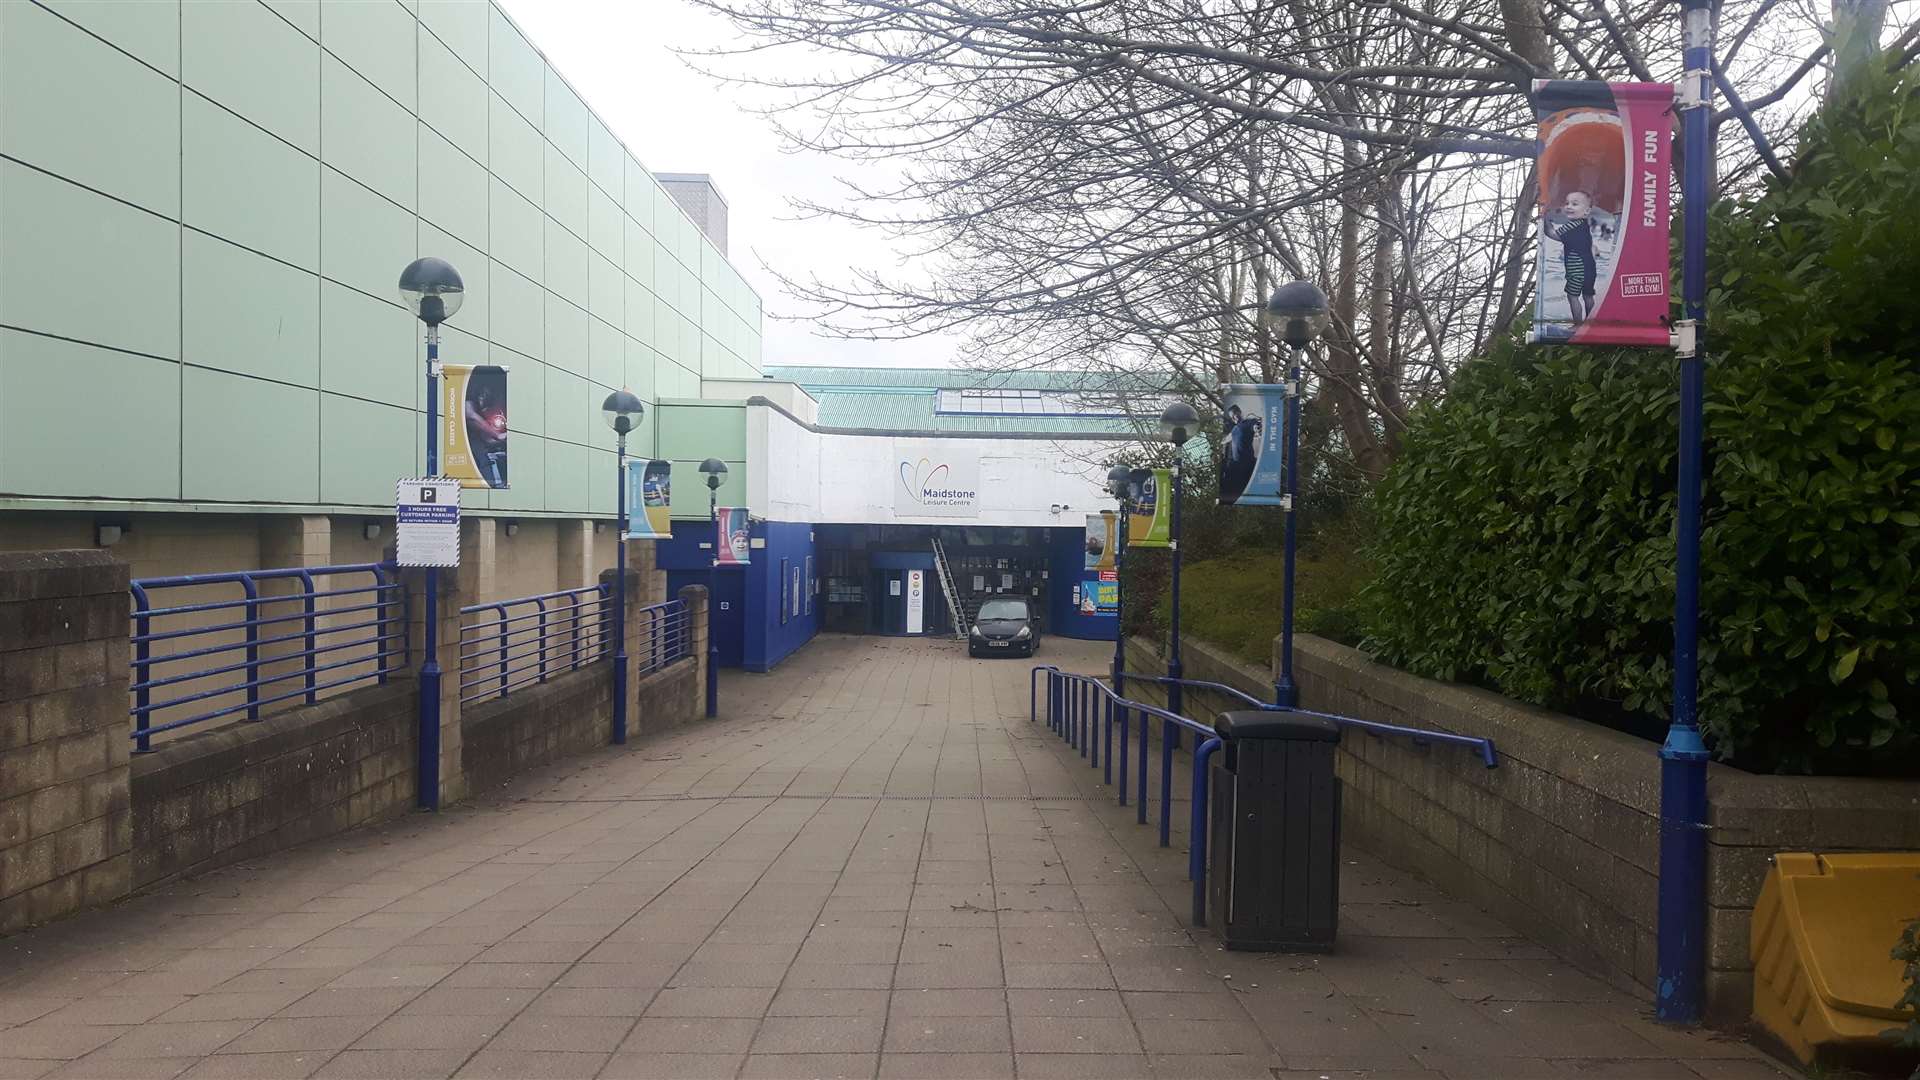 Maidstone Leisure Centre backs onto Mote Park